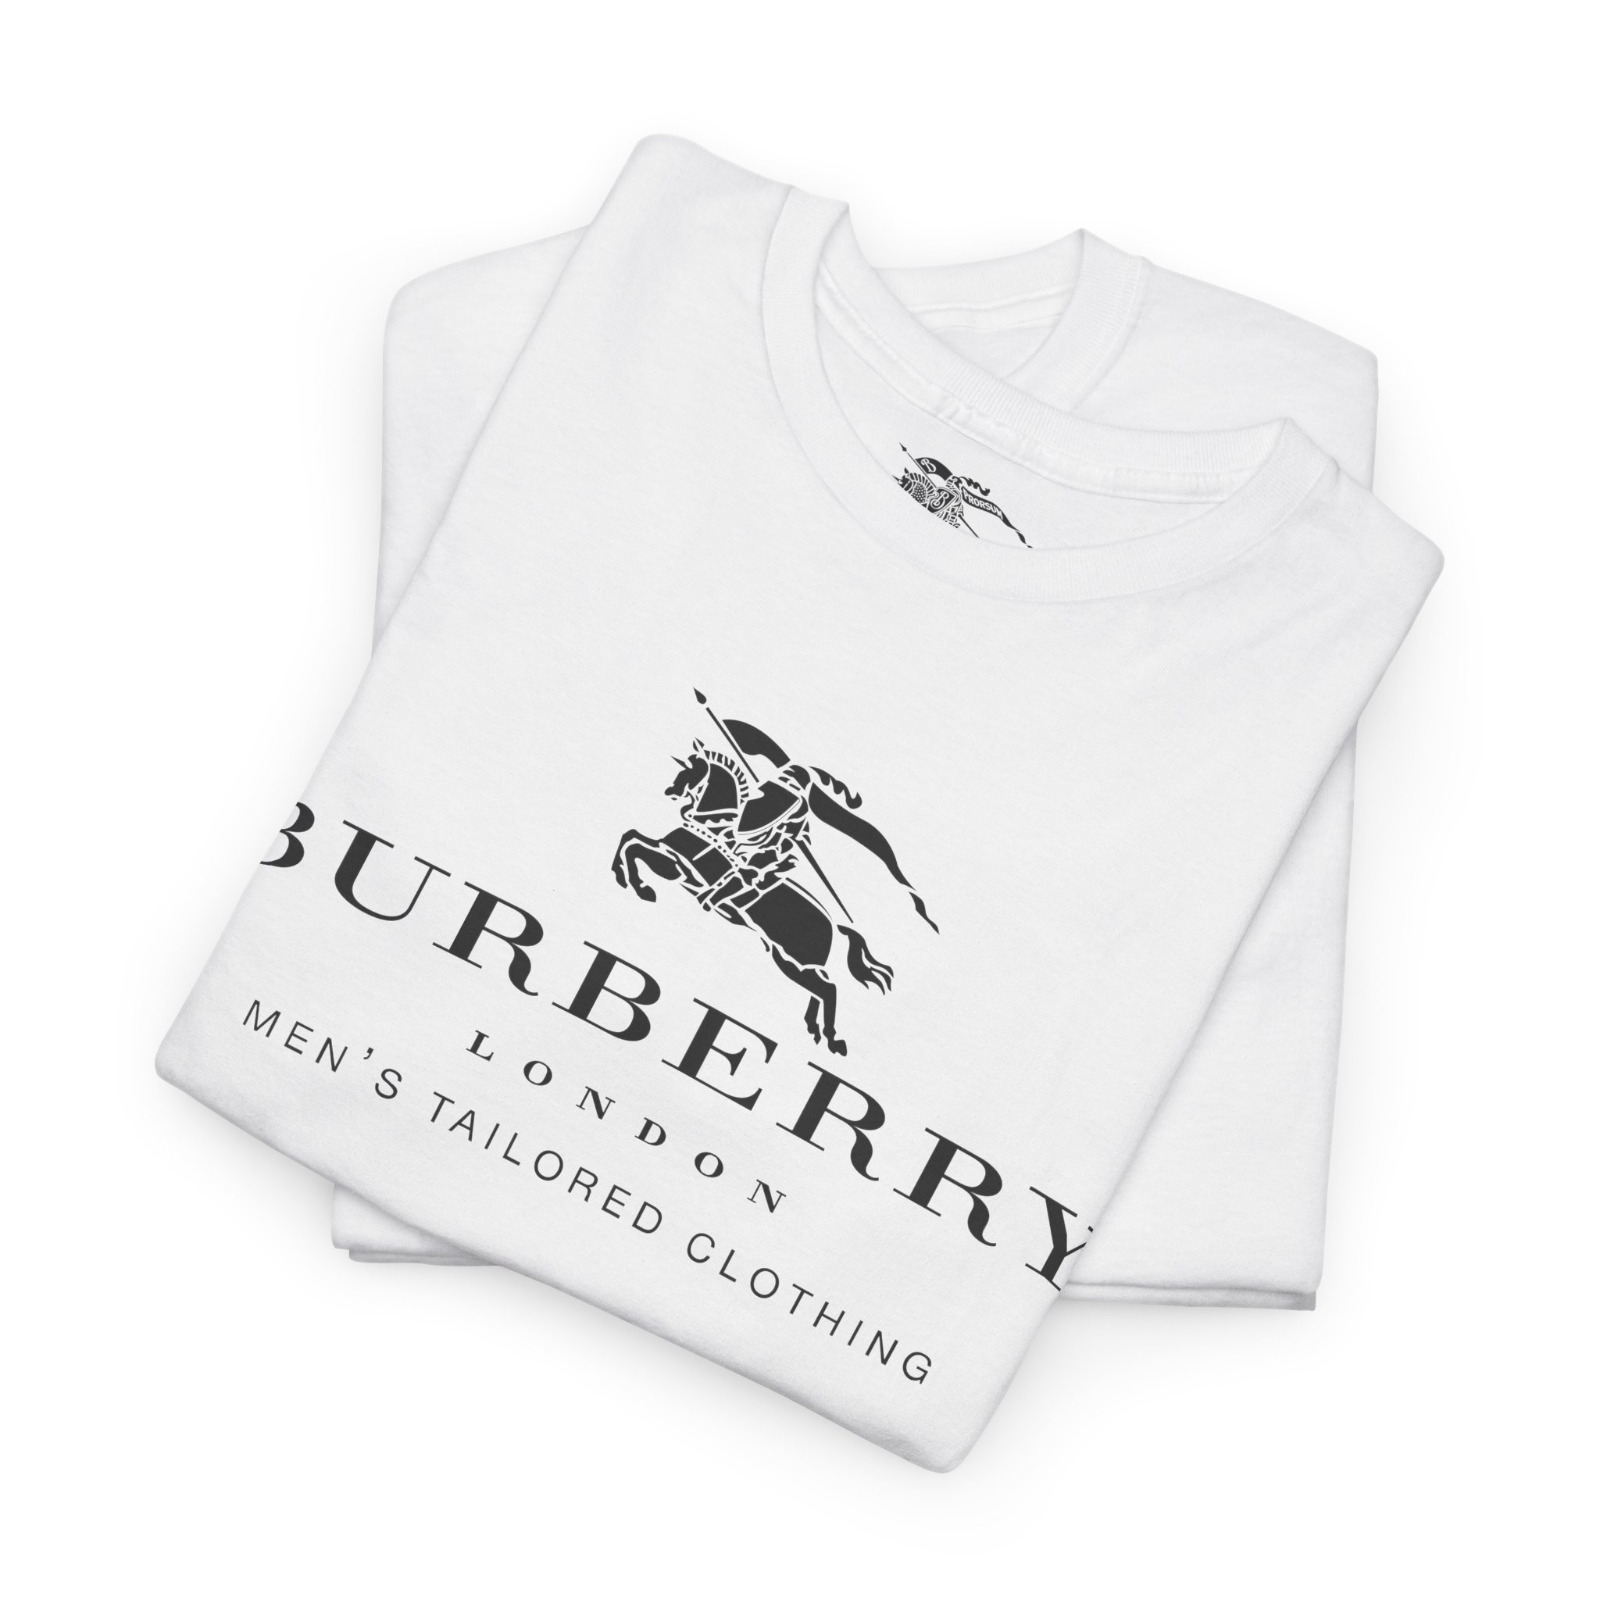 Burberry Logo New T-Shirt London England Men’s Tee Size S-5XL USA